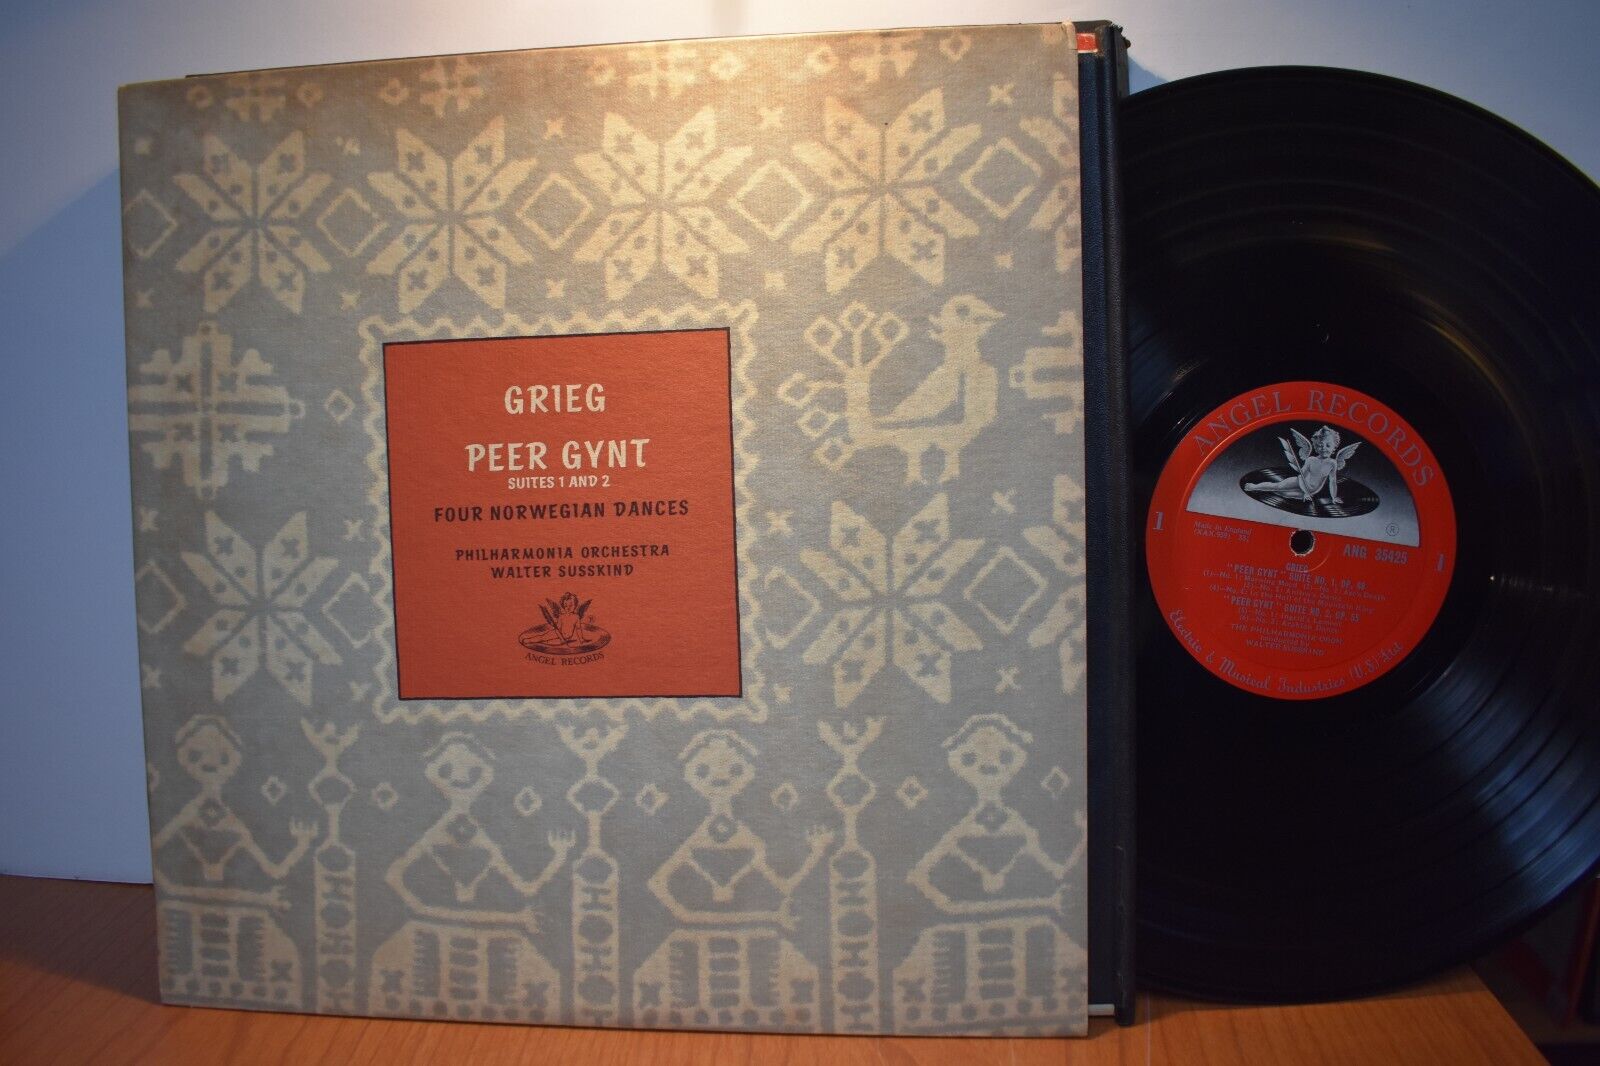 Susskind Philharmonia Grieg Peer Gynt 4 Norwegian Dances Angel ANG35425 Mono